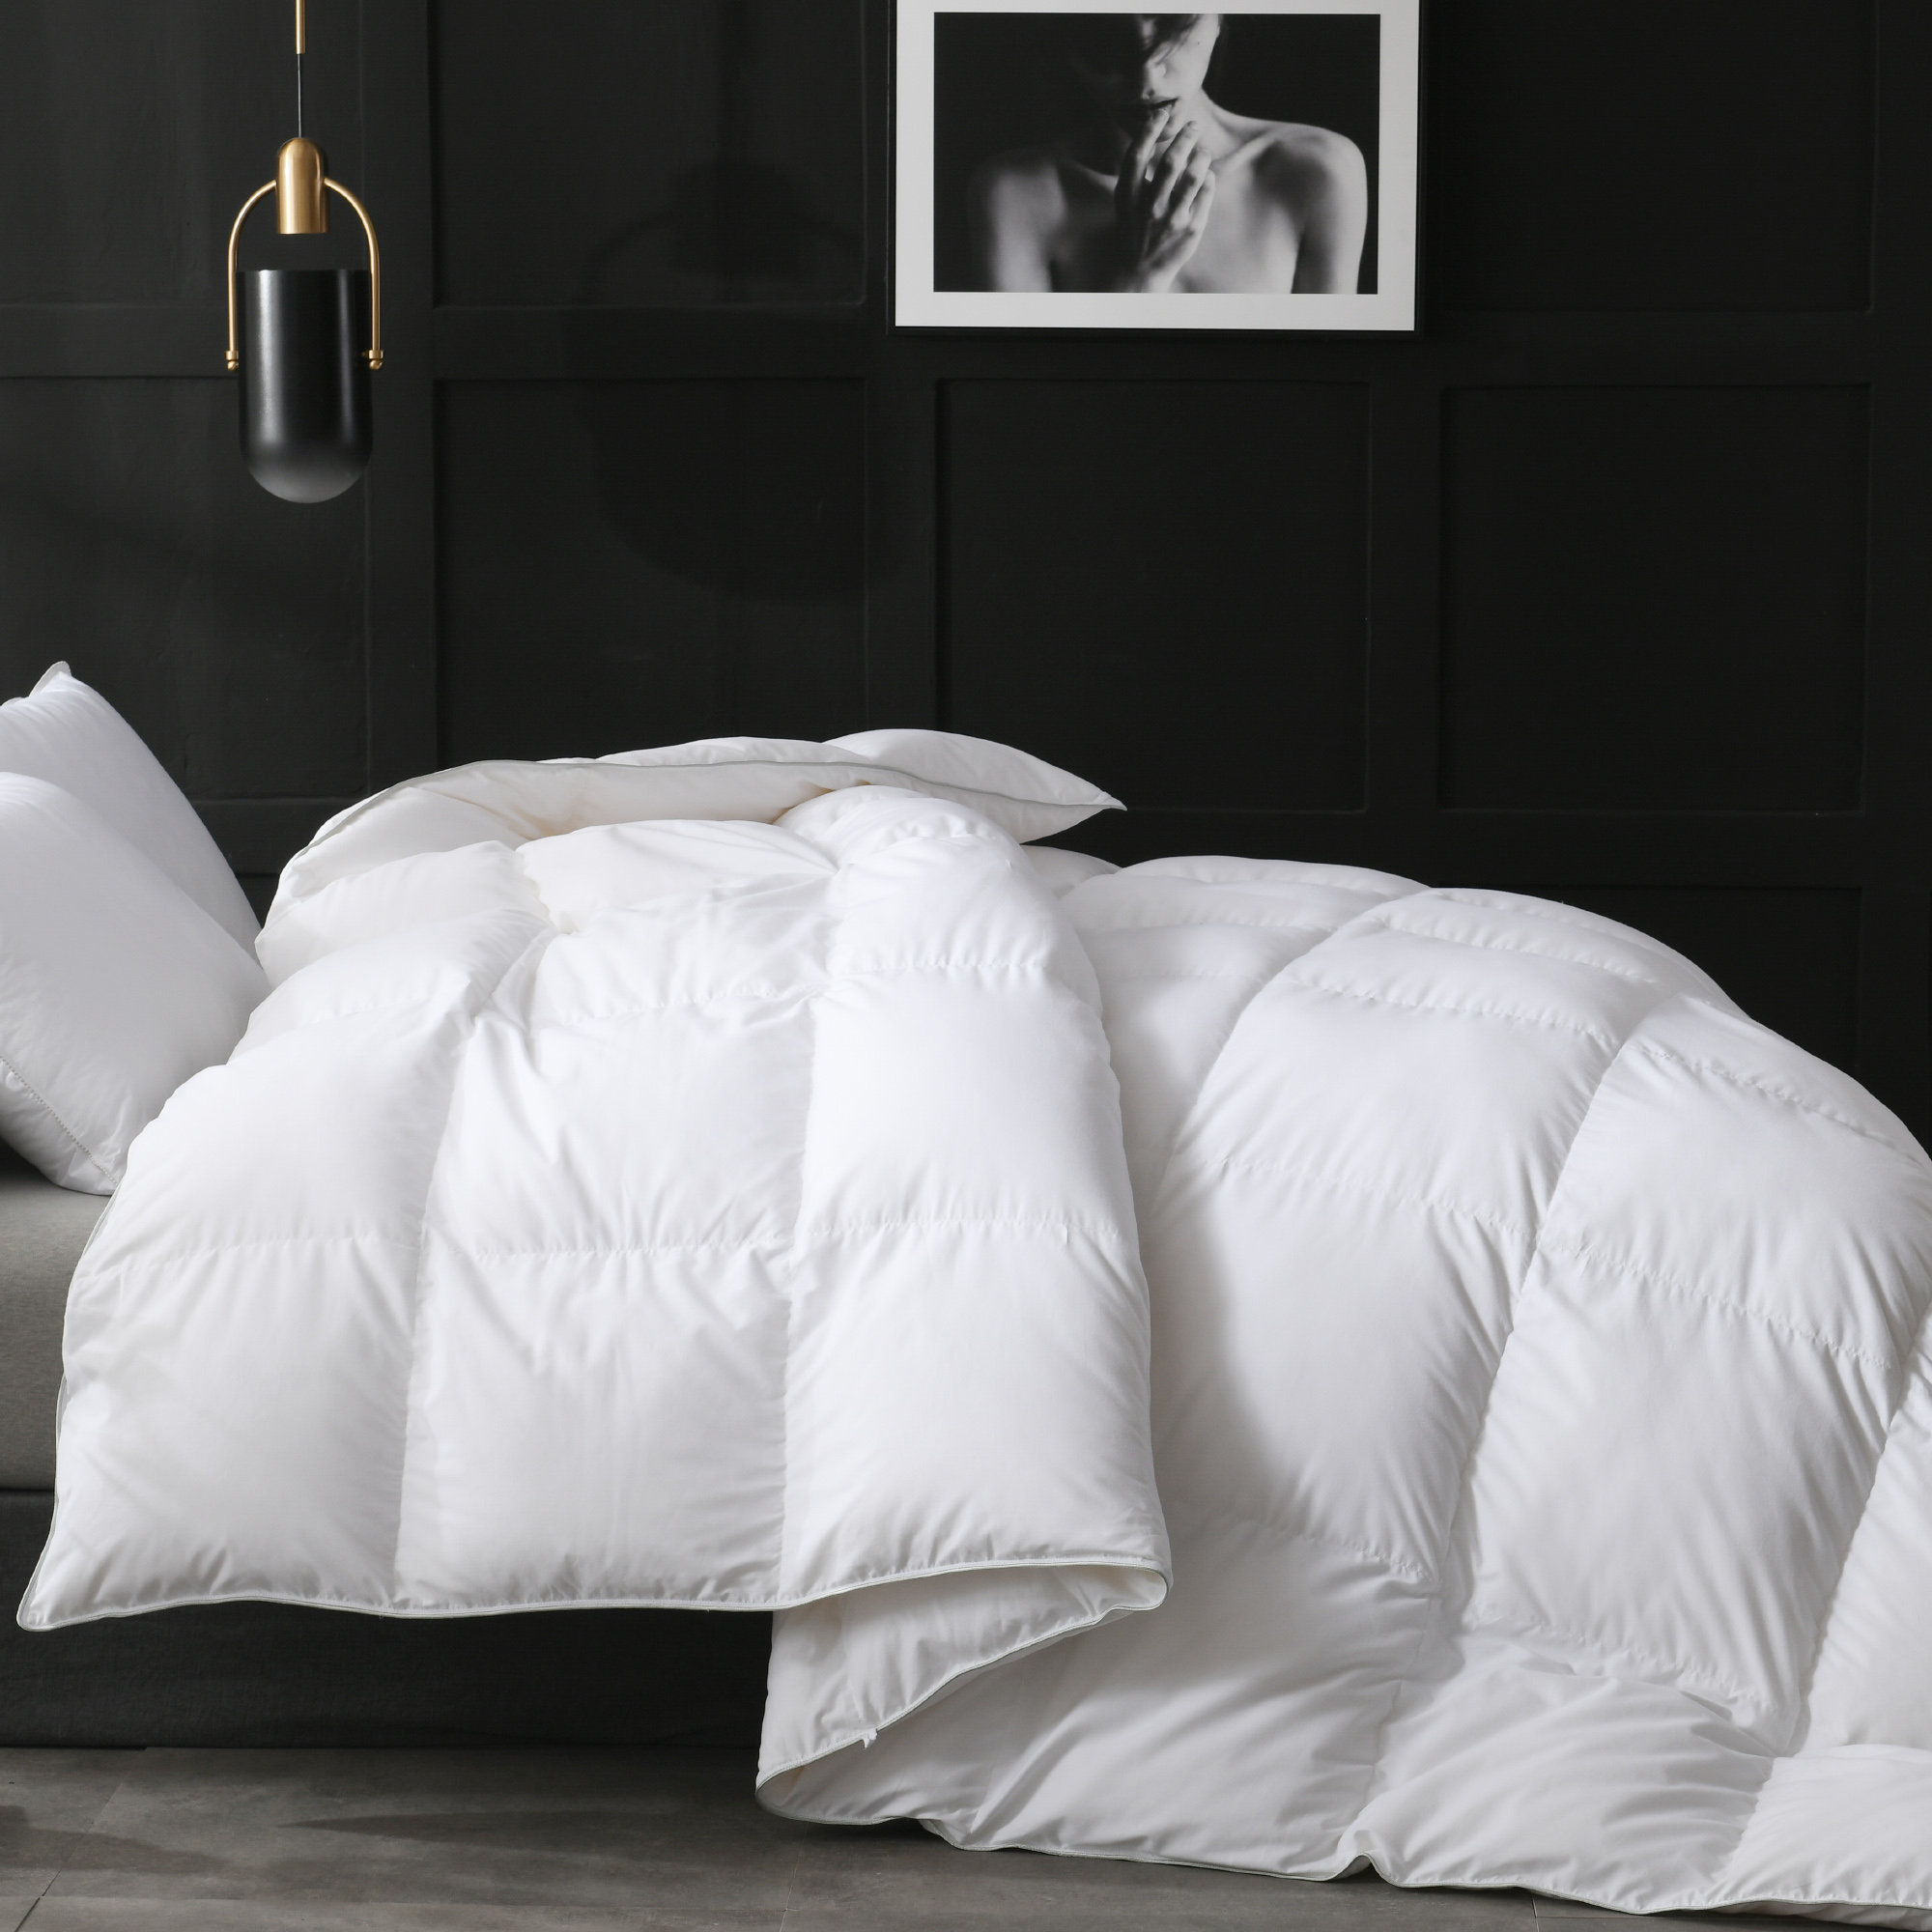 Snuggle Soft 850 Fill Power Goose Down Pillows - Standard (20 x 26)